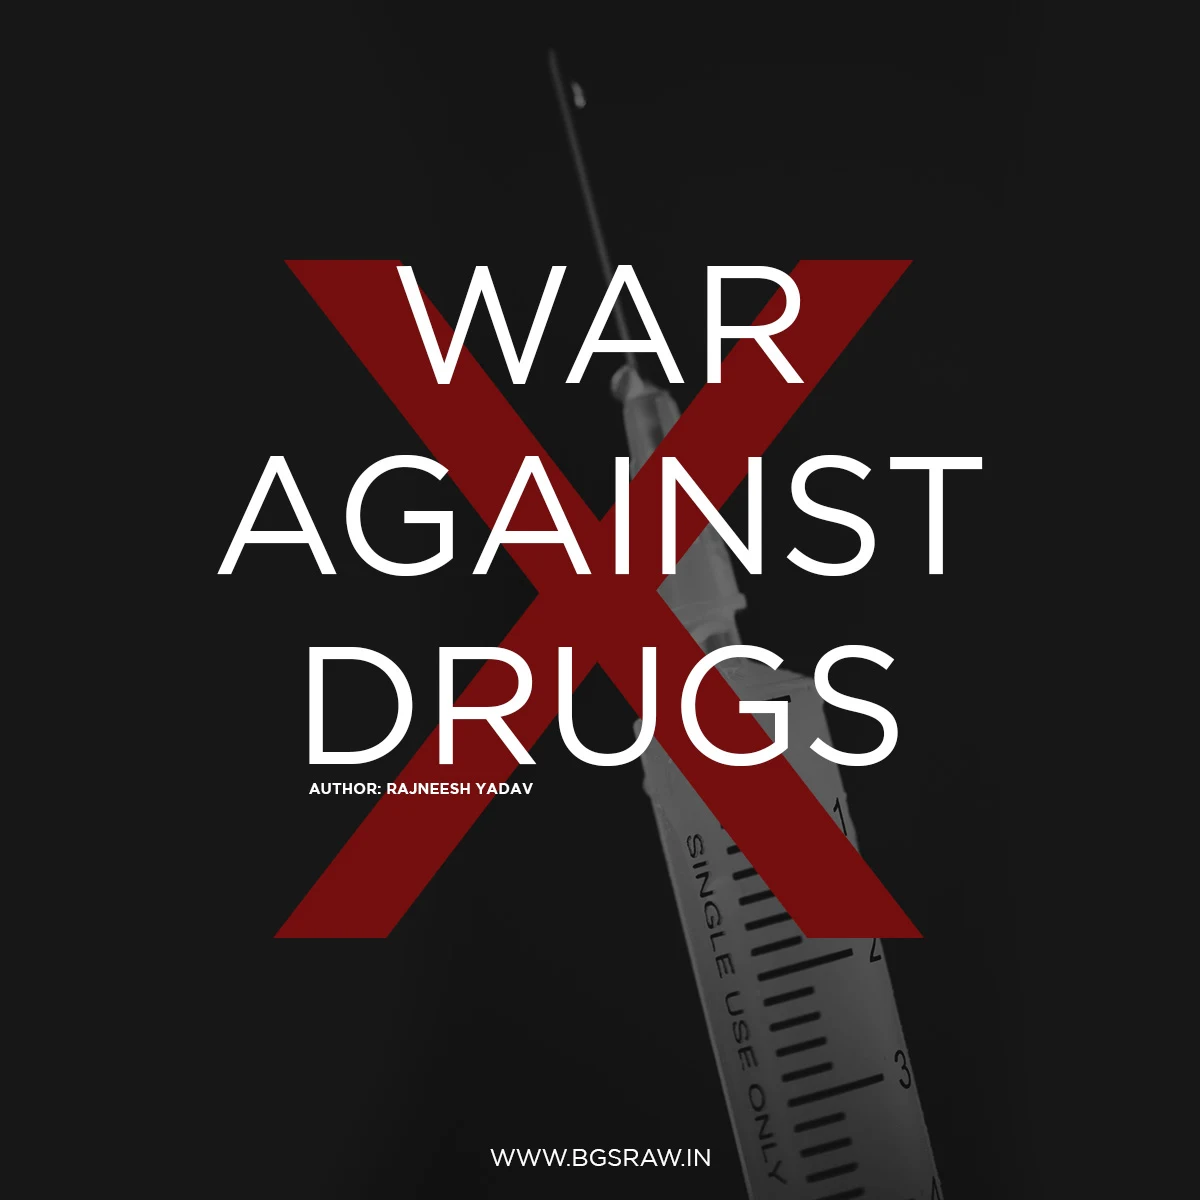 Author: Rajneesh Yadav on Bgs Raw The War Against Drugs - A Motivational Talk